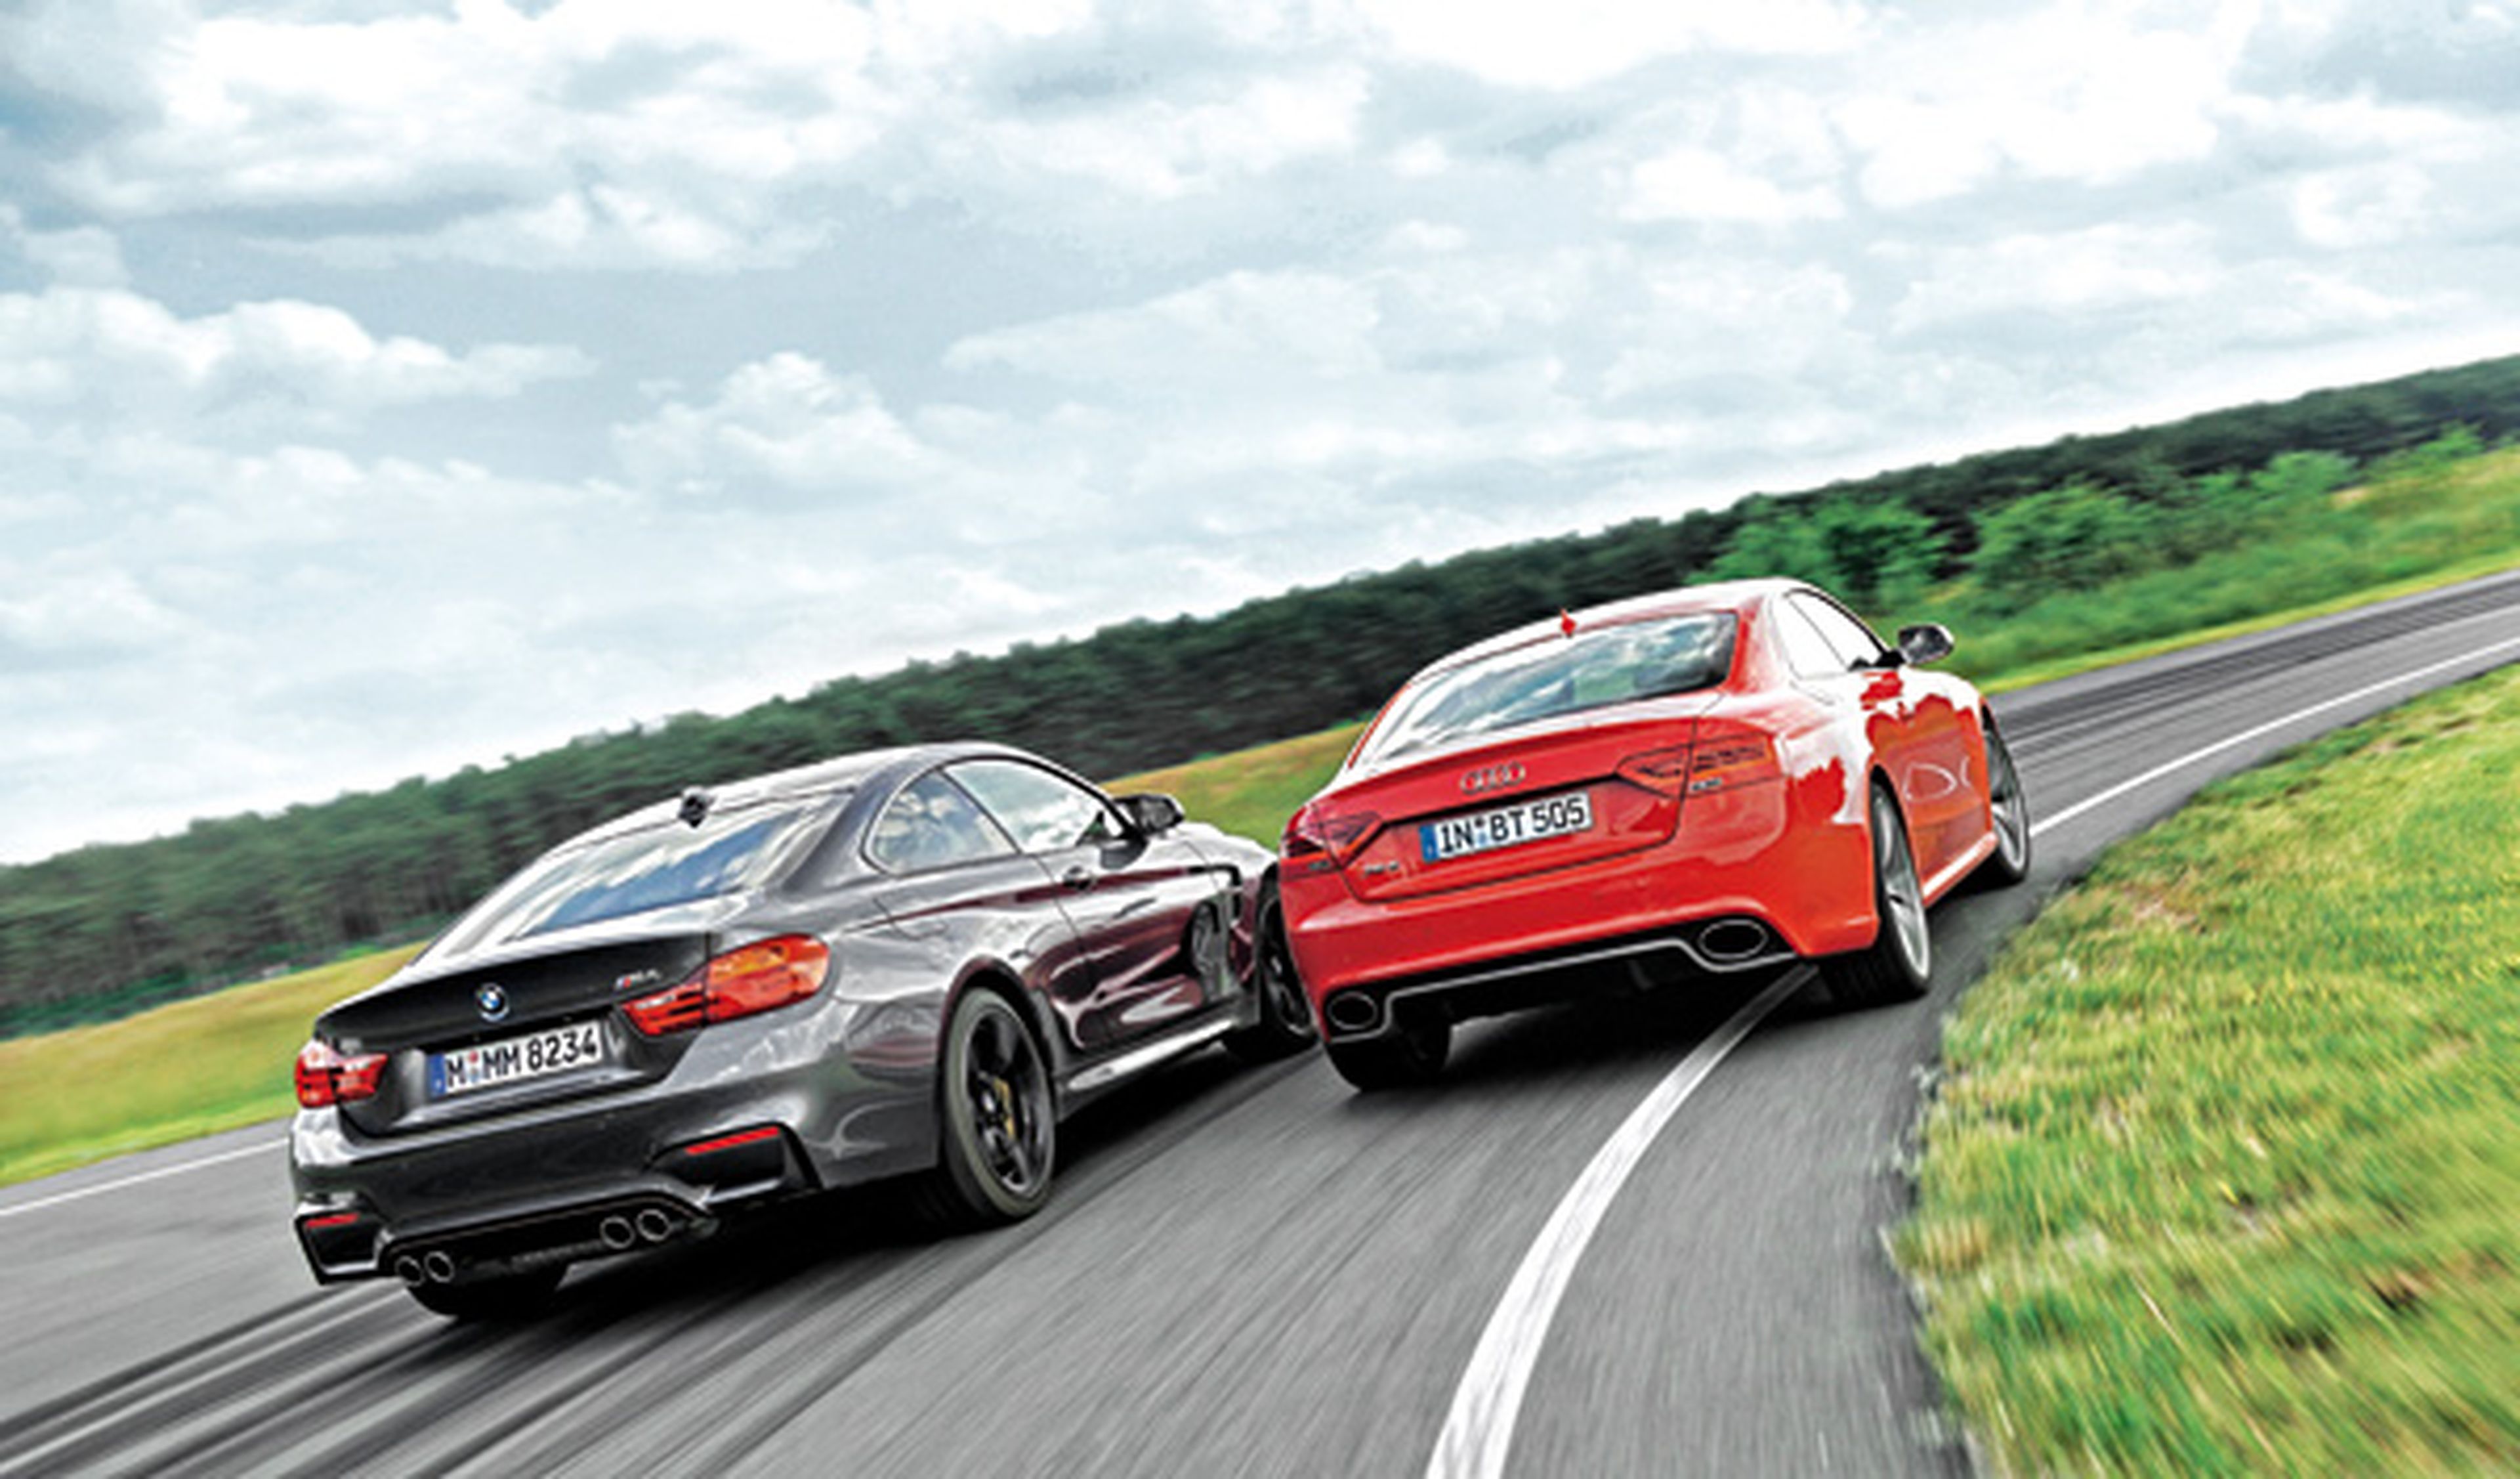 Comparativa: Audi RS 5 contra BMW M4